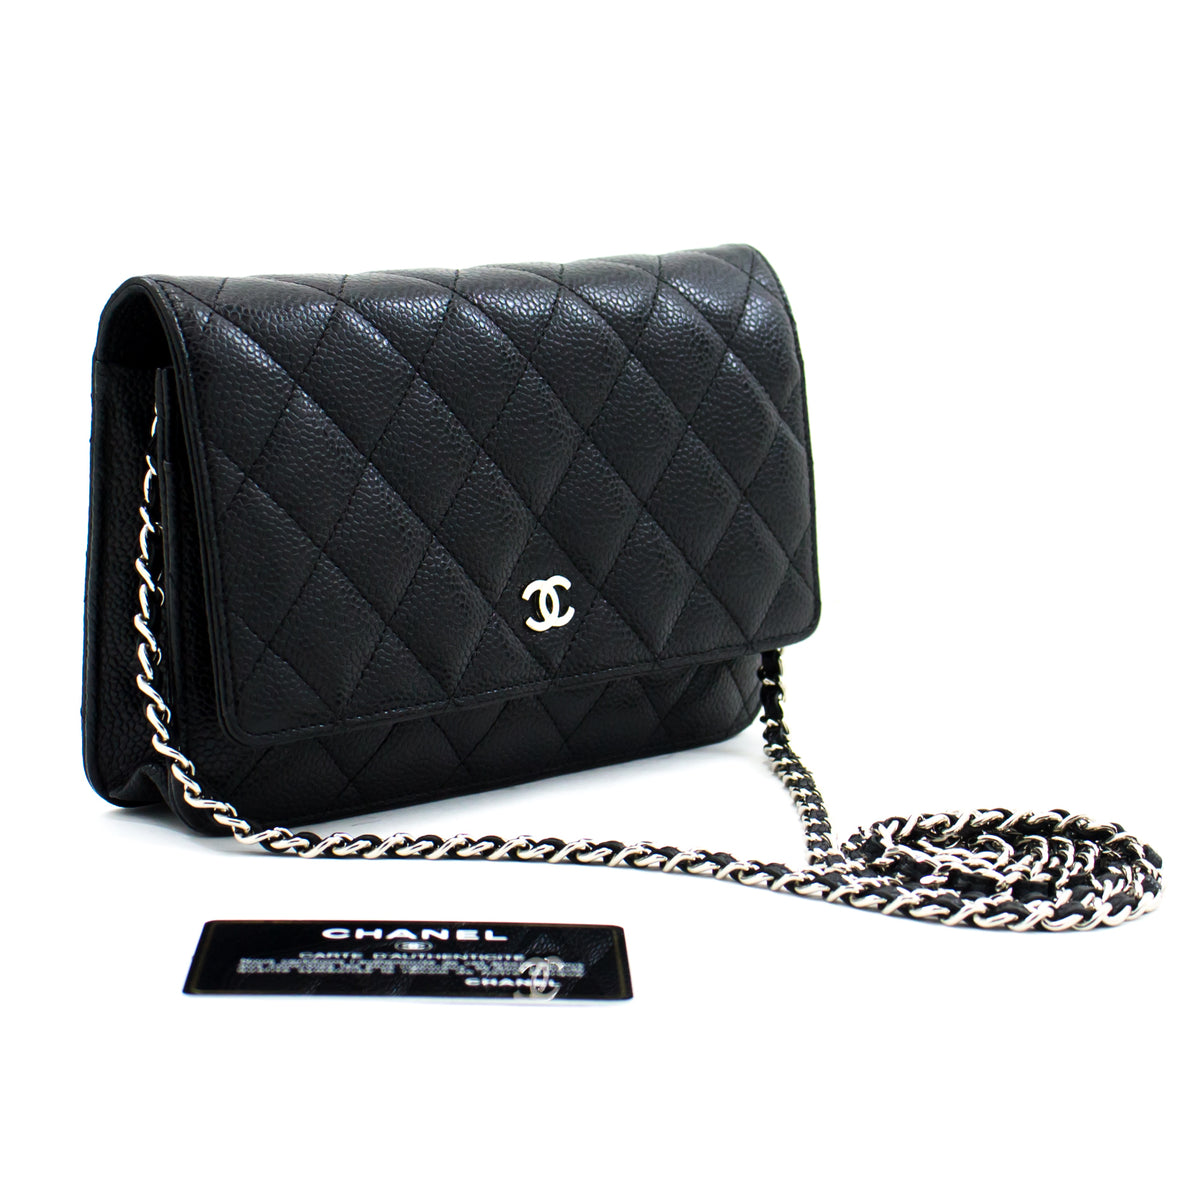 CHANEL Caviar Wallet On Chain WOC Black Shoulder Bag Crossbody i97 -  hannari-shop